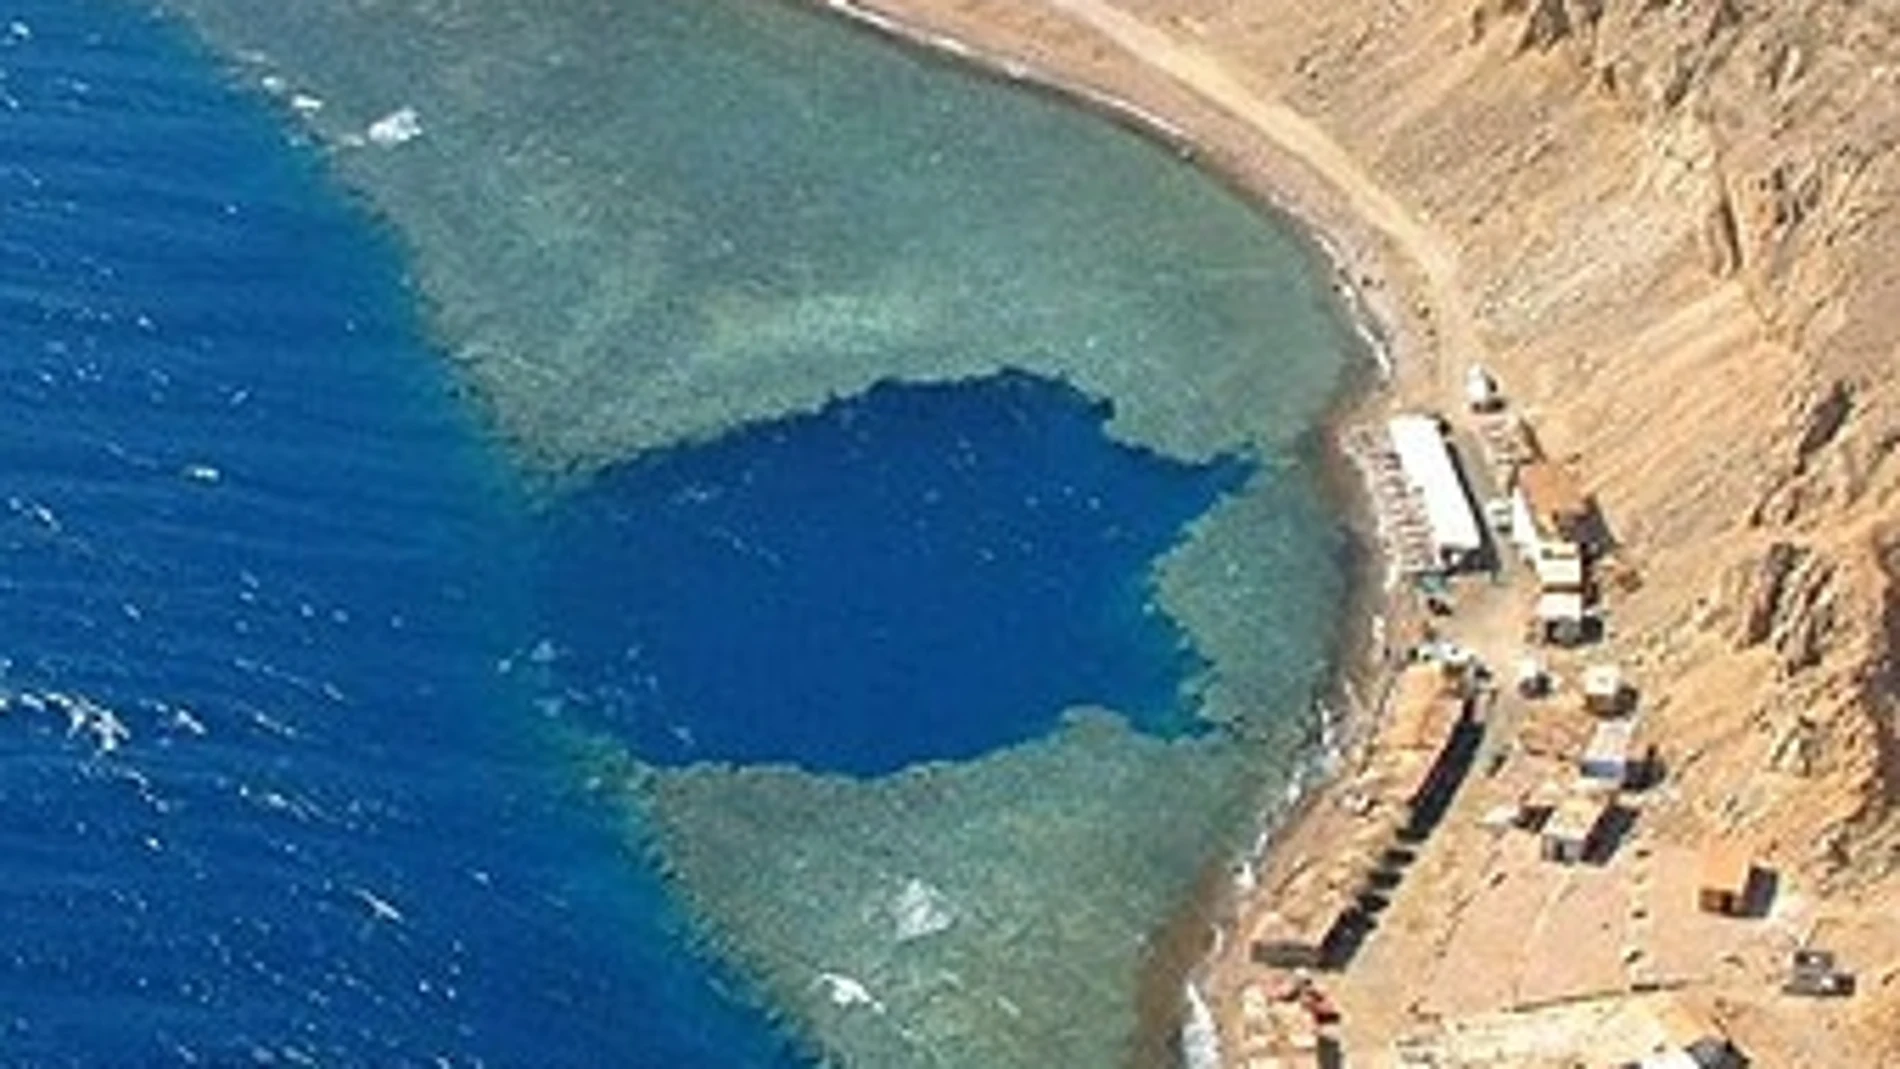 Imagen aérea del agujero azul "Blue Hole" egipcio